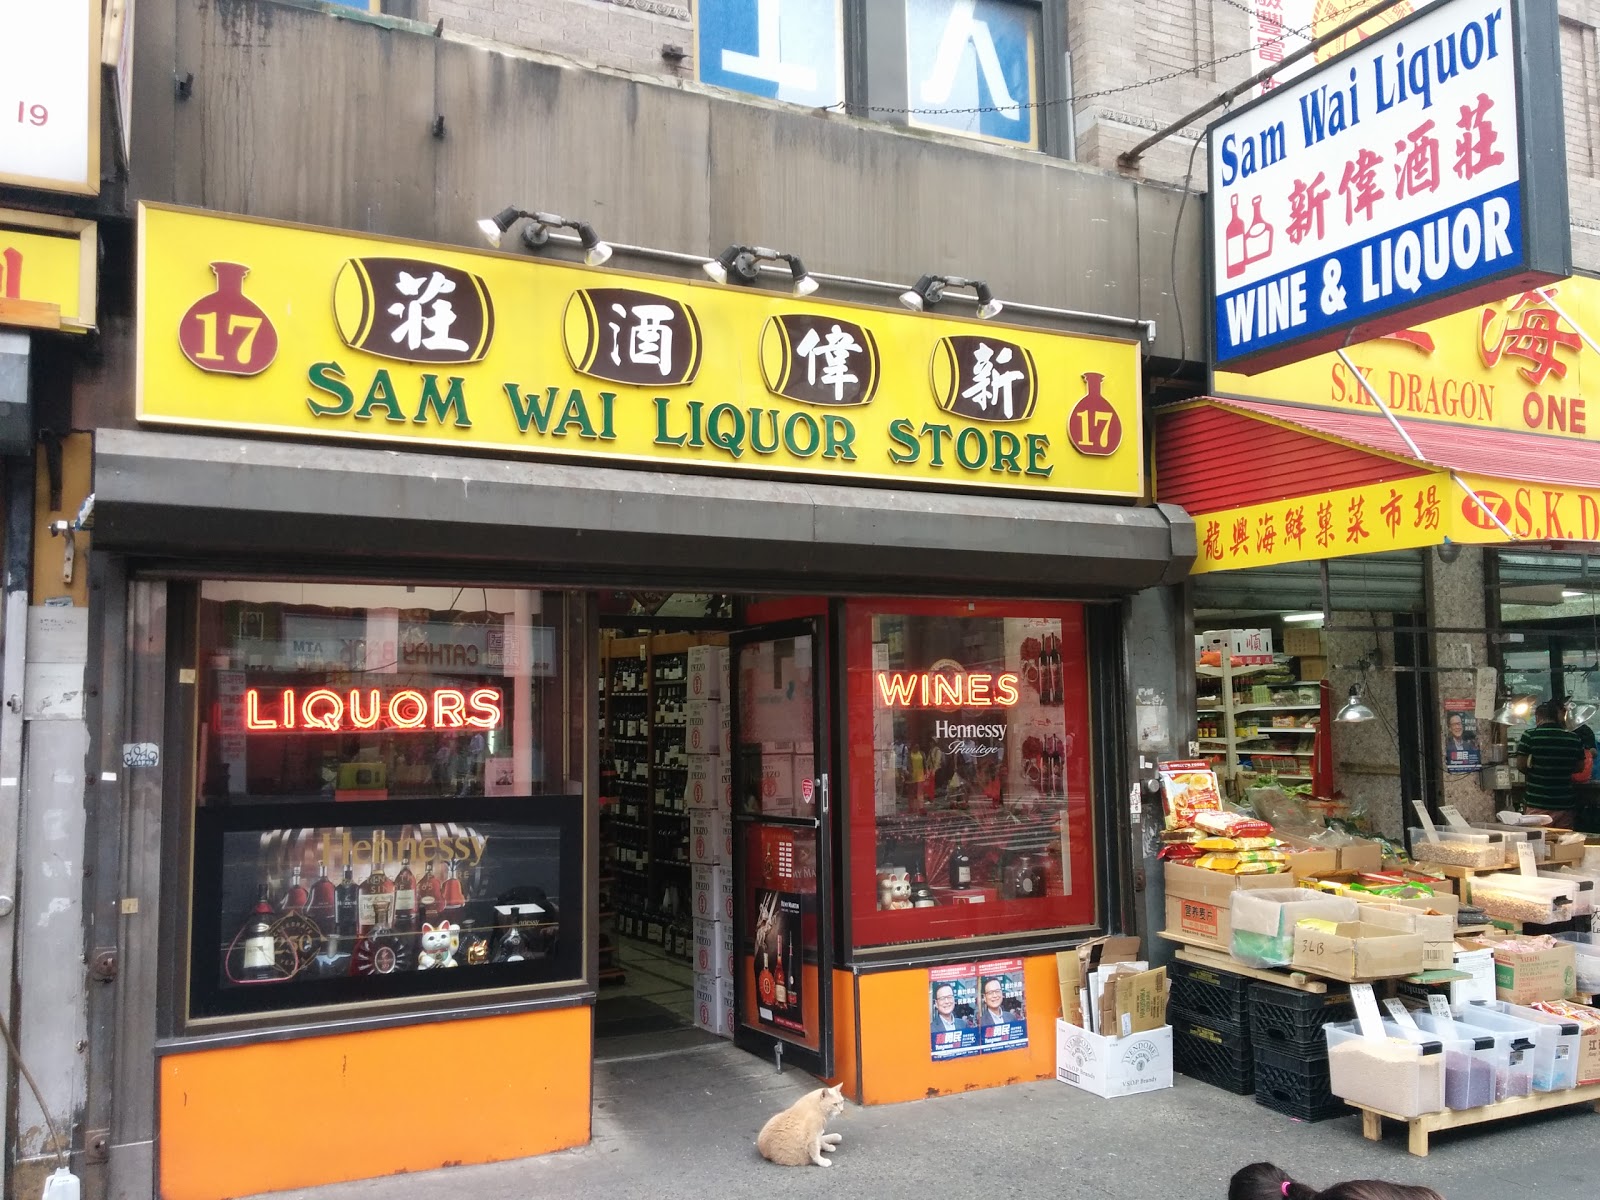 Photo of Sam Wai Liquor Store in New York City, New York, United States - 1 Picture of Point of interest, Establishment, Store, Liquor store